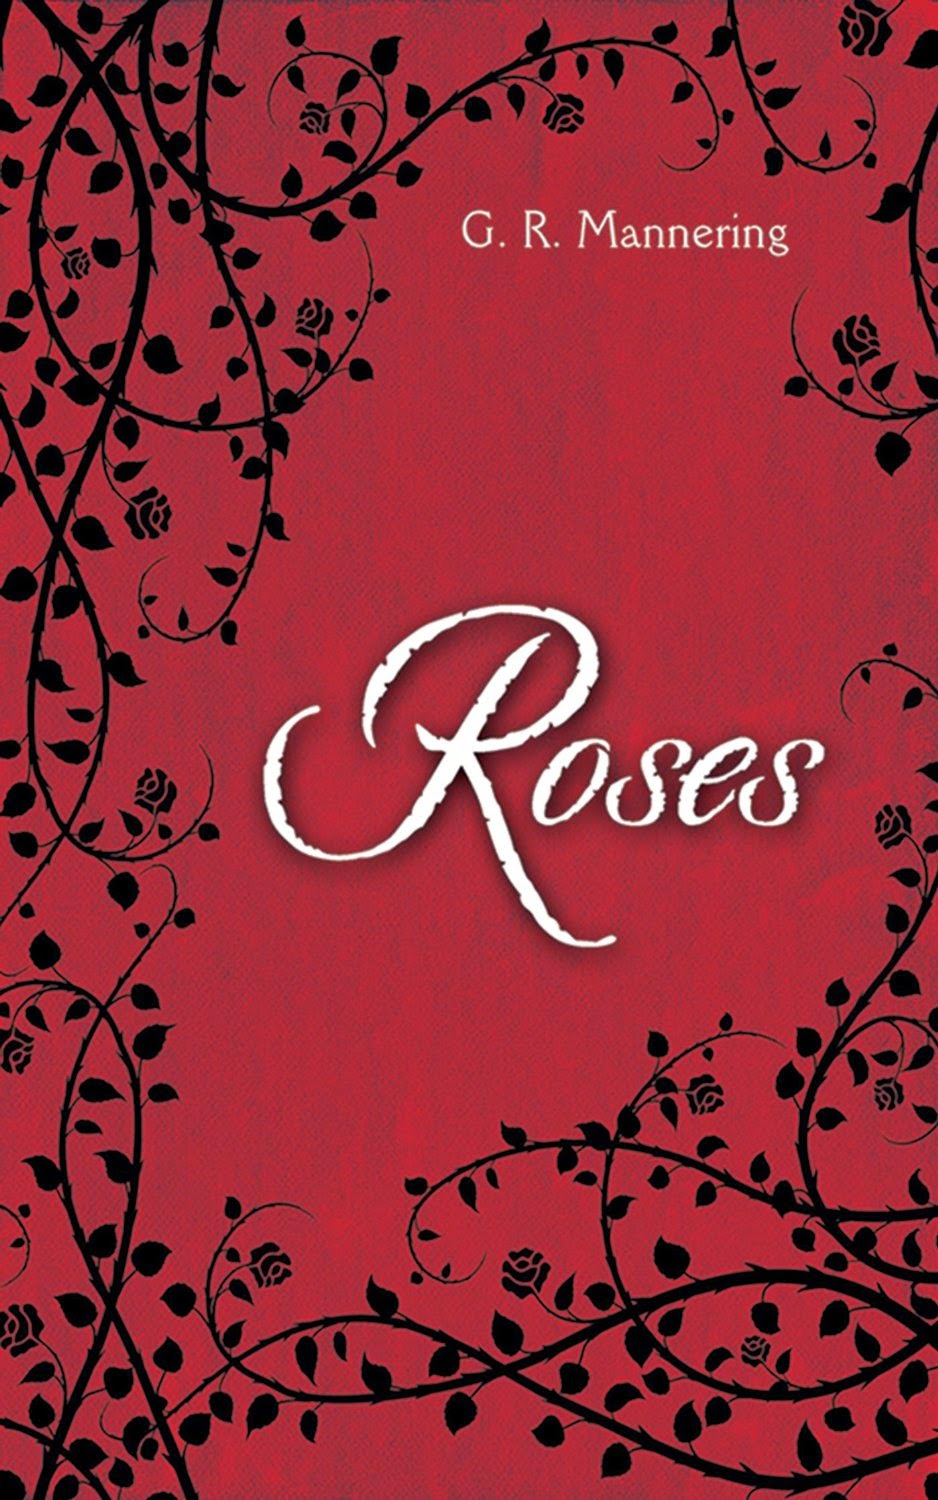 http://www.amazon.com/Roses-G-R-Mannering-ebook/dp/B00E25ITAM/ref=sr_1_3?s=digital-text&ie=UTF8&qid=1422138431&sr=1-3&keywords=roses